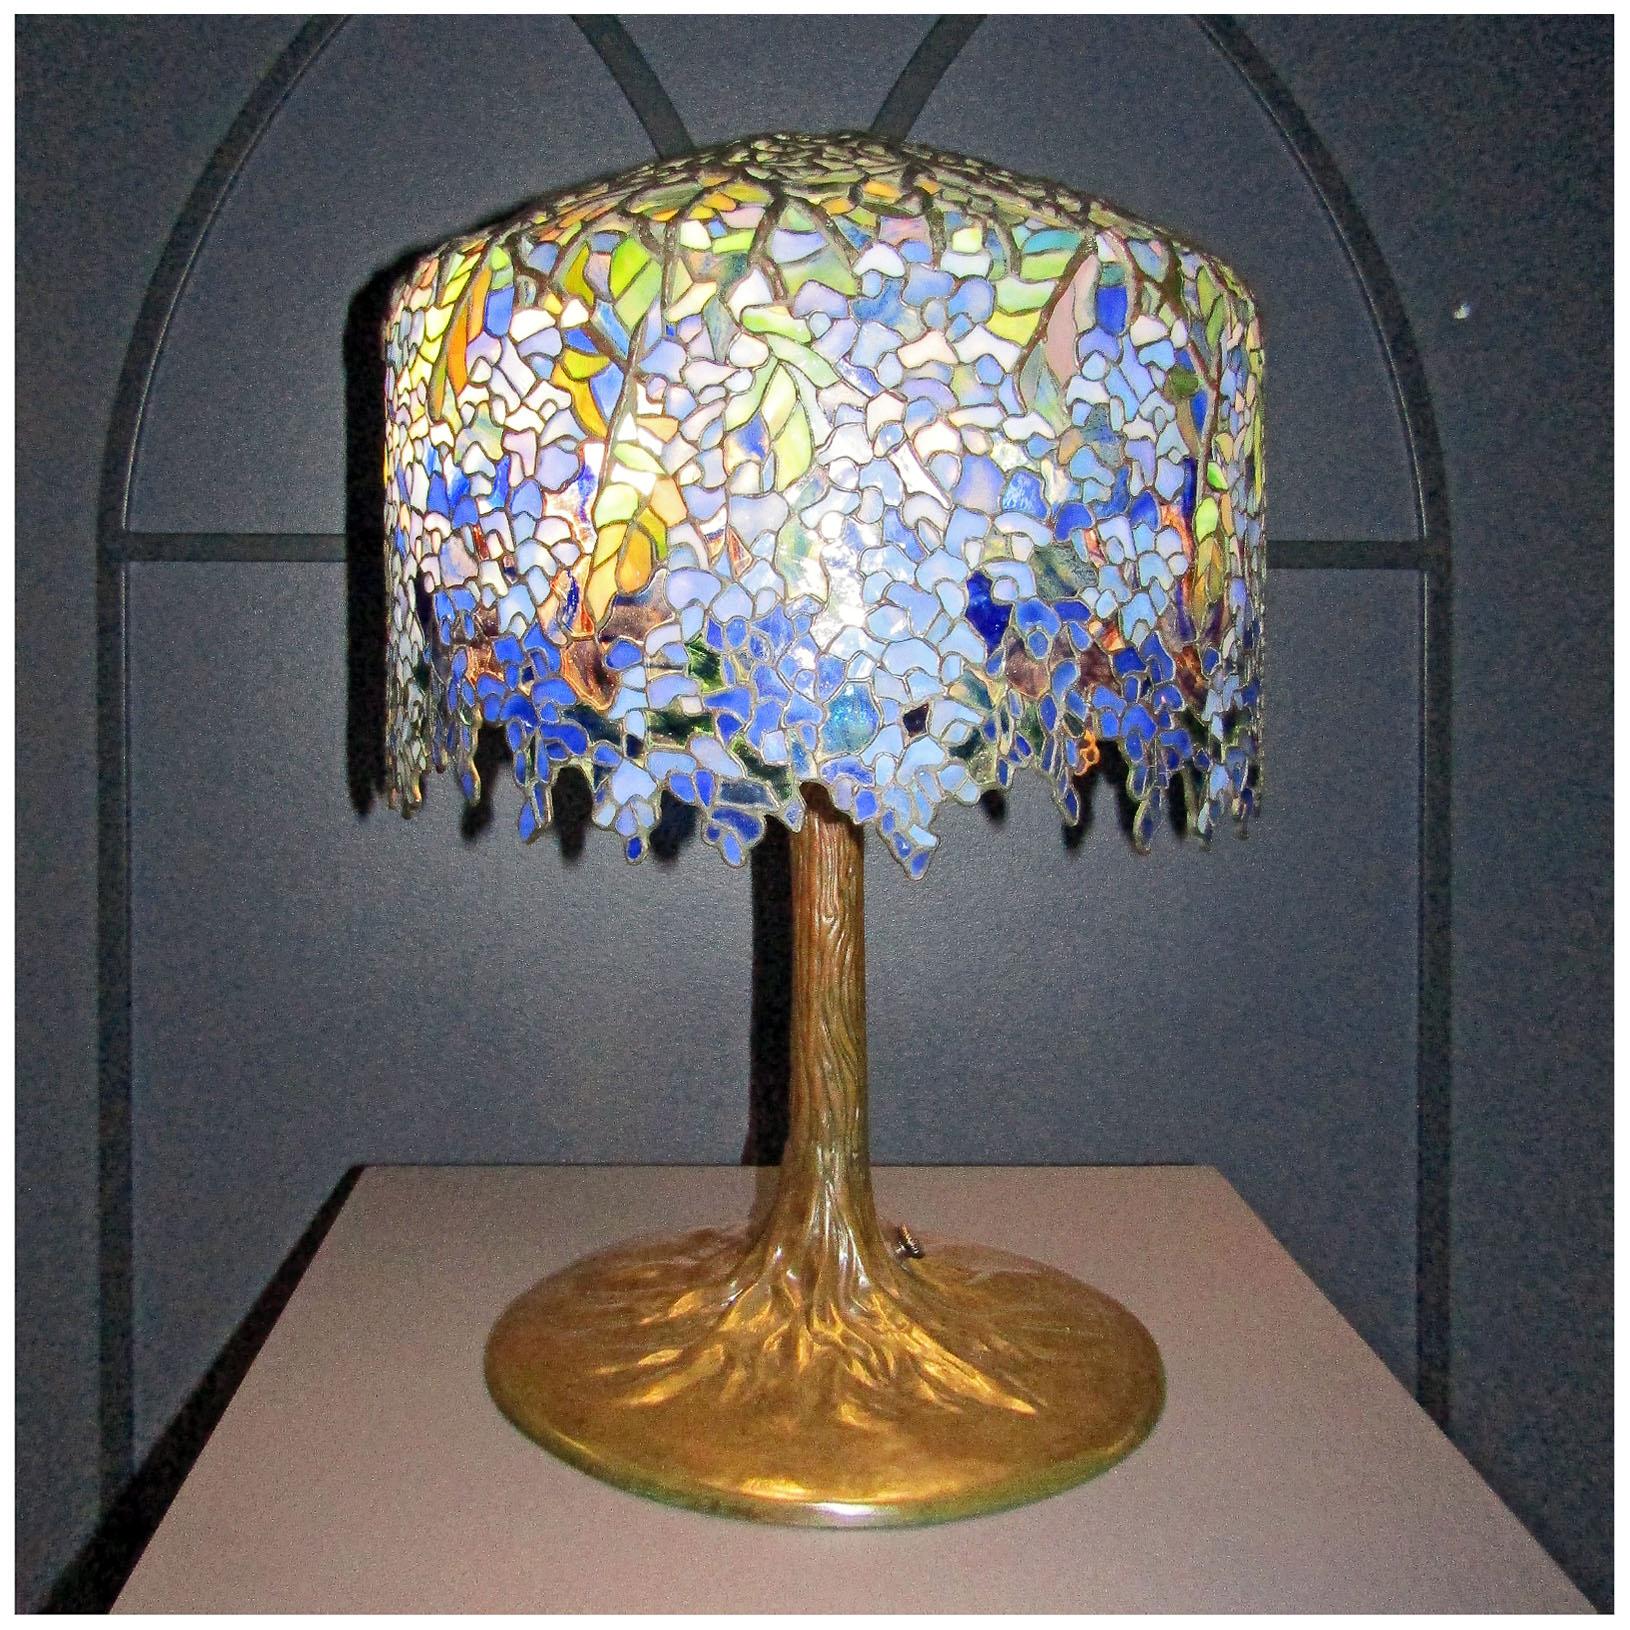 Tiffany Studios. Wisteria Library Lamp. 1902. Virginia Museum of Fine Arts